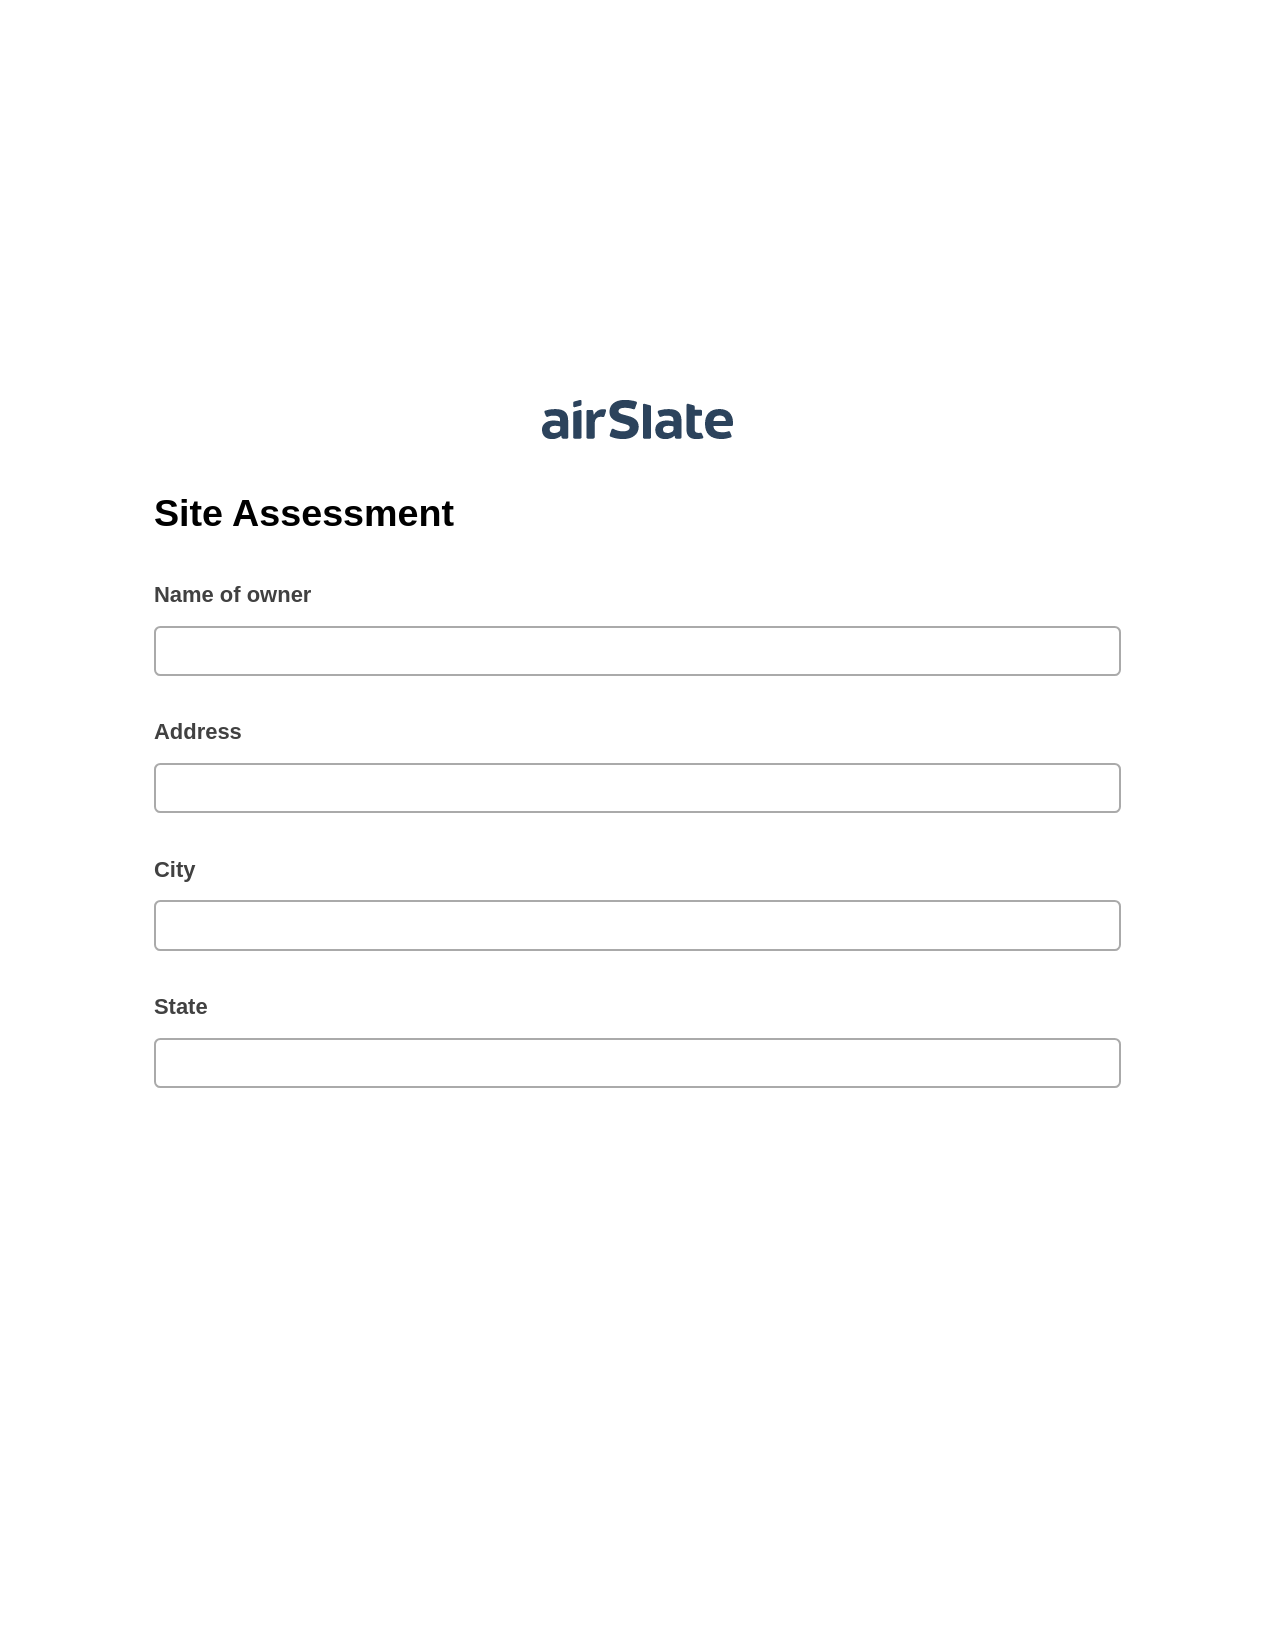 Multirole Site Assessment Pre-fill from Excel Spreadsheet Bot, Webhook Bot, Slack Notification Postfinish Bot